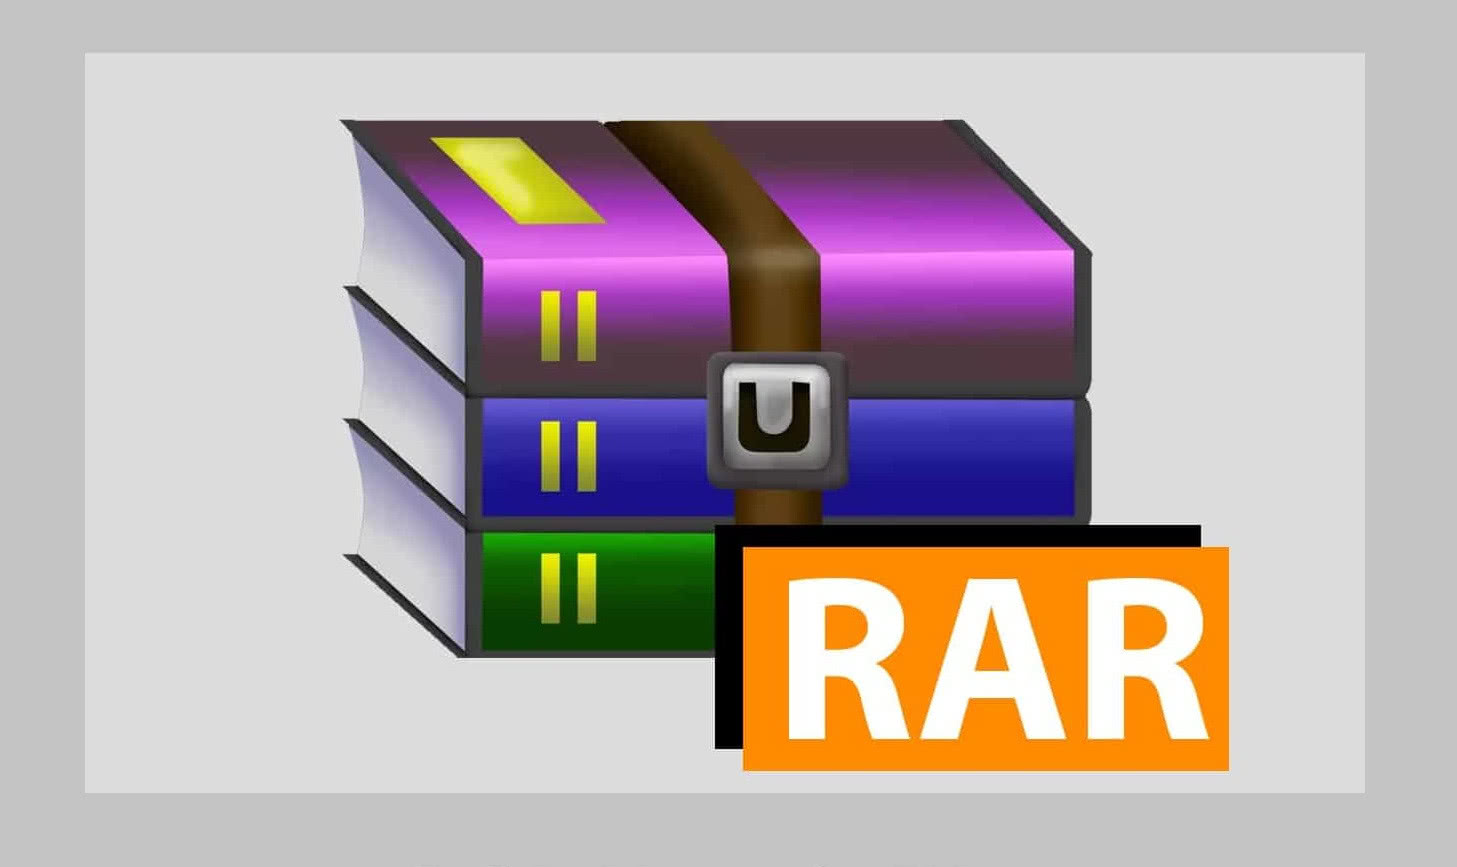 Rar c файл. Архиватор WINRAR. Архиваторы значки. Значок винрар. Значок архива WINRAR.